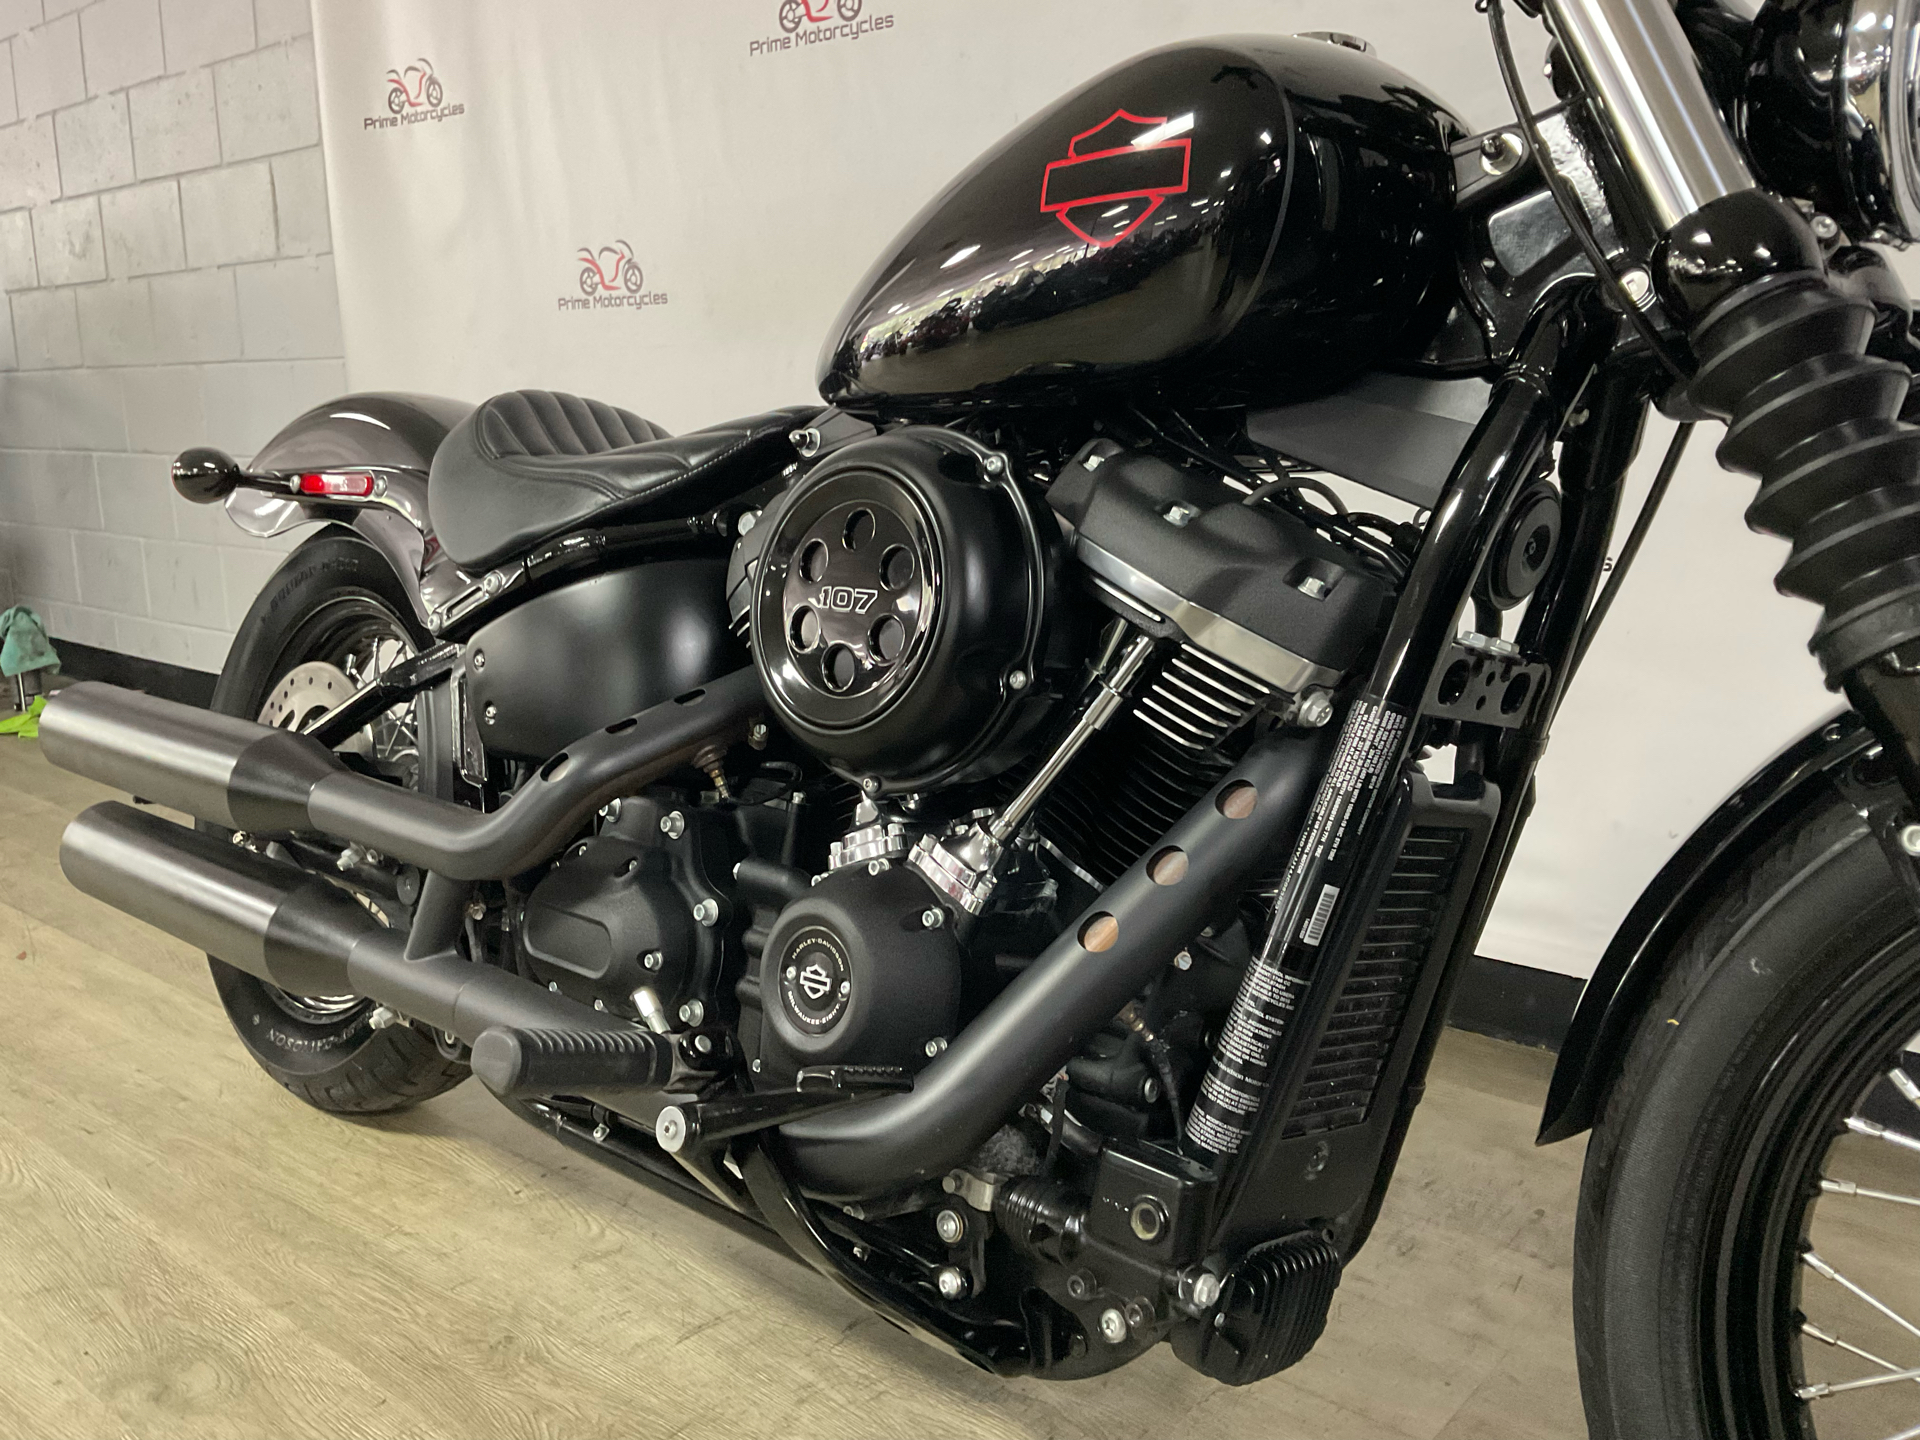 2018 Harley-Davidson Street Bob® 107 in Sanford, Florida - Photo 18